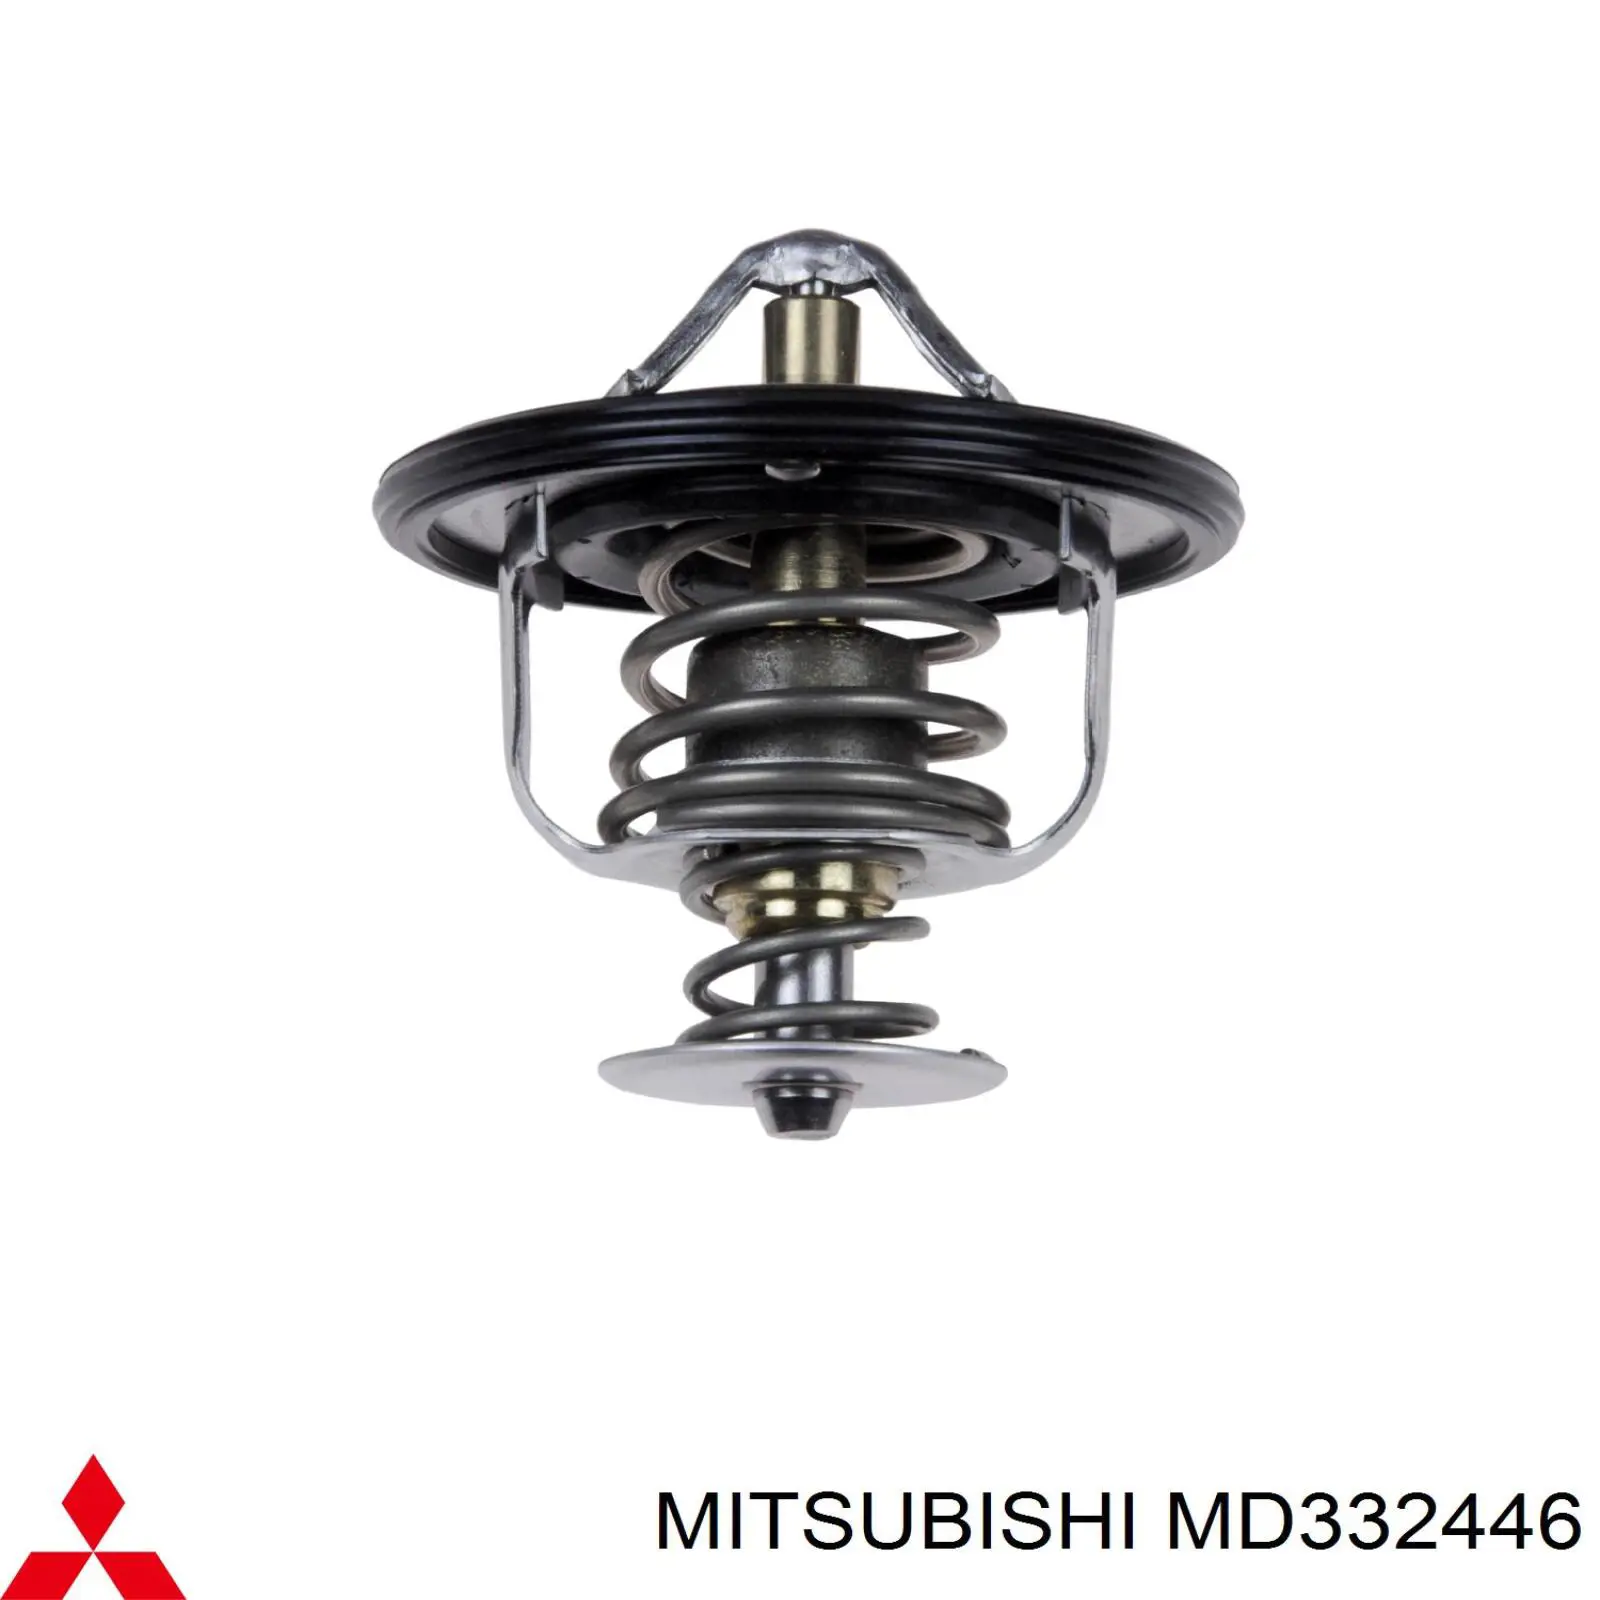 MD332446 Mitsubishi termostato